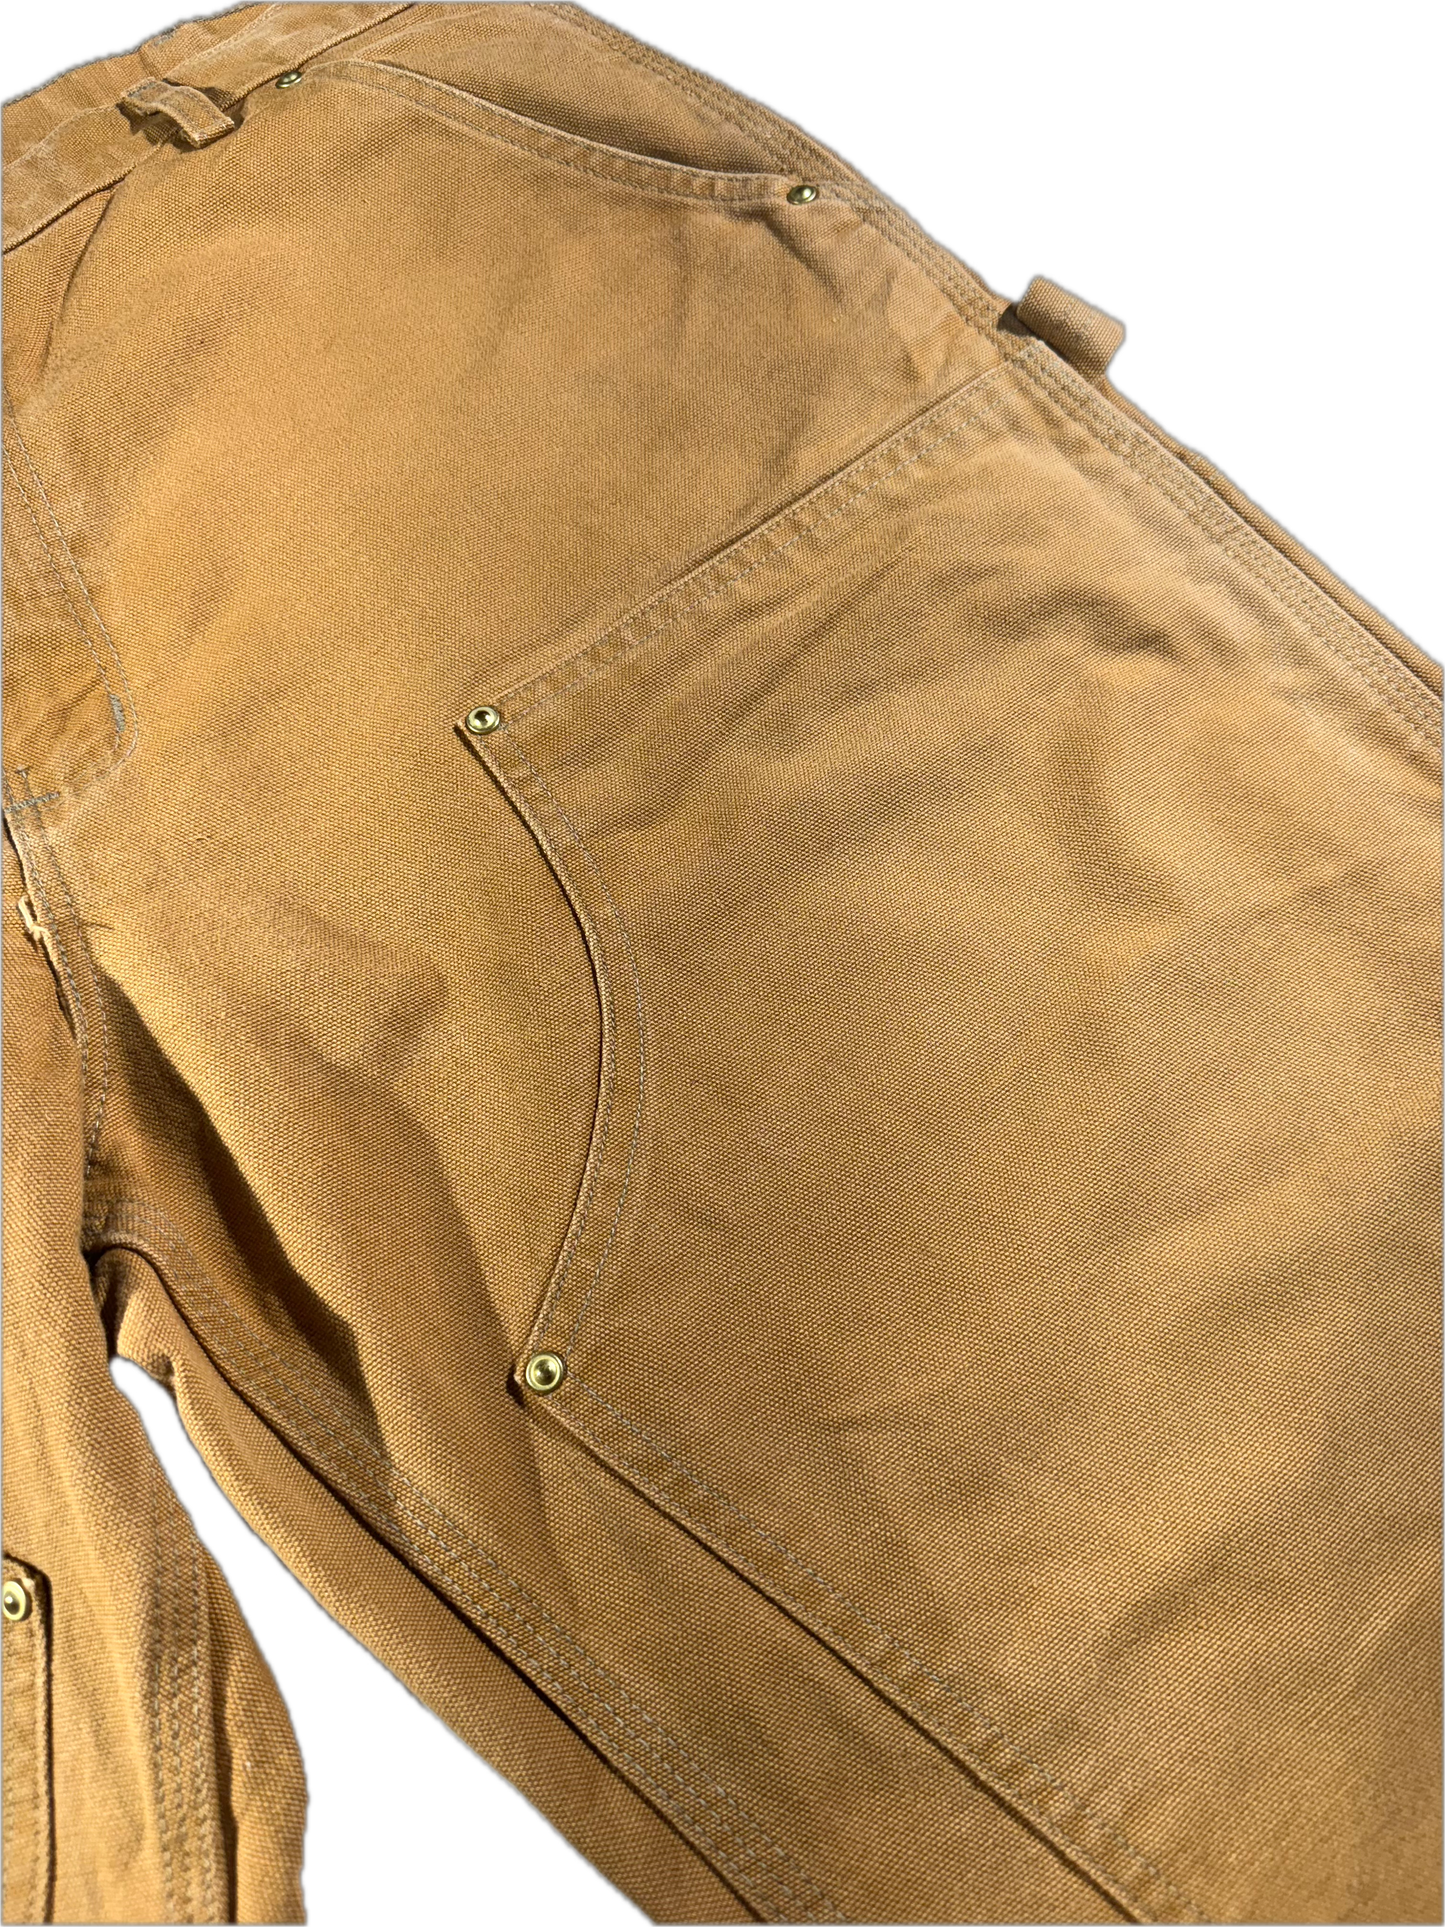 Vintage Carhartt Pants Double Knee USA Made